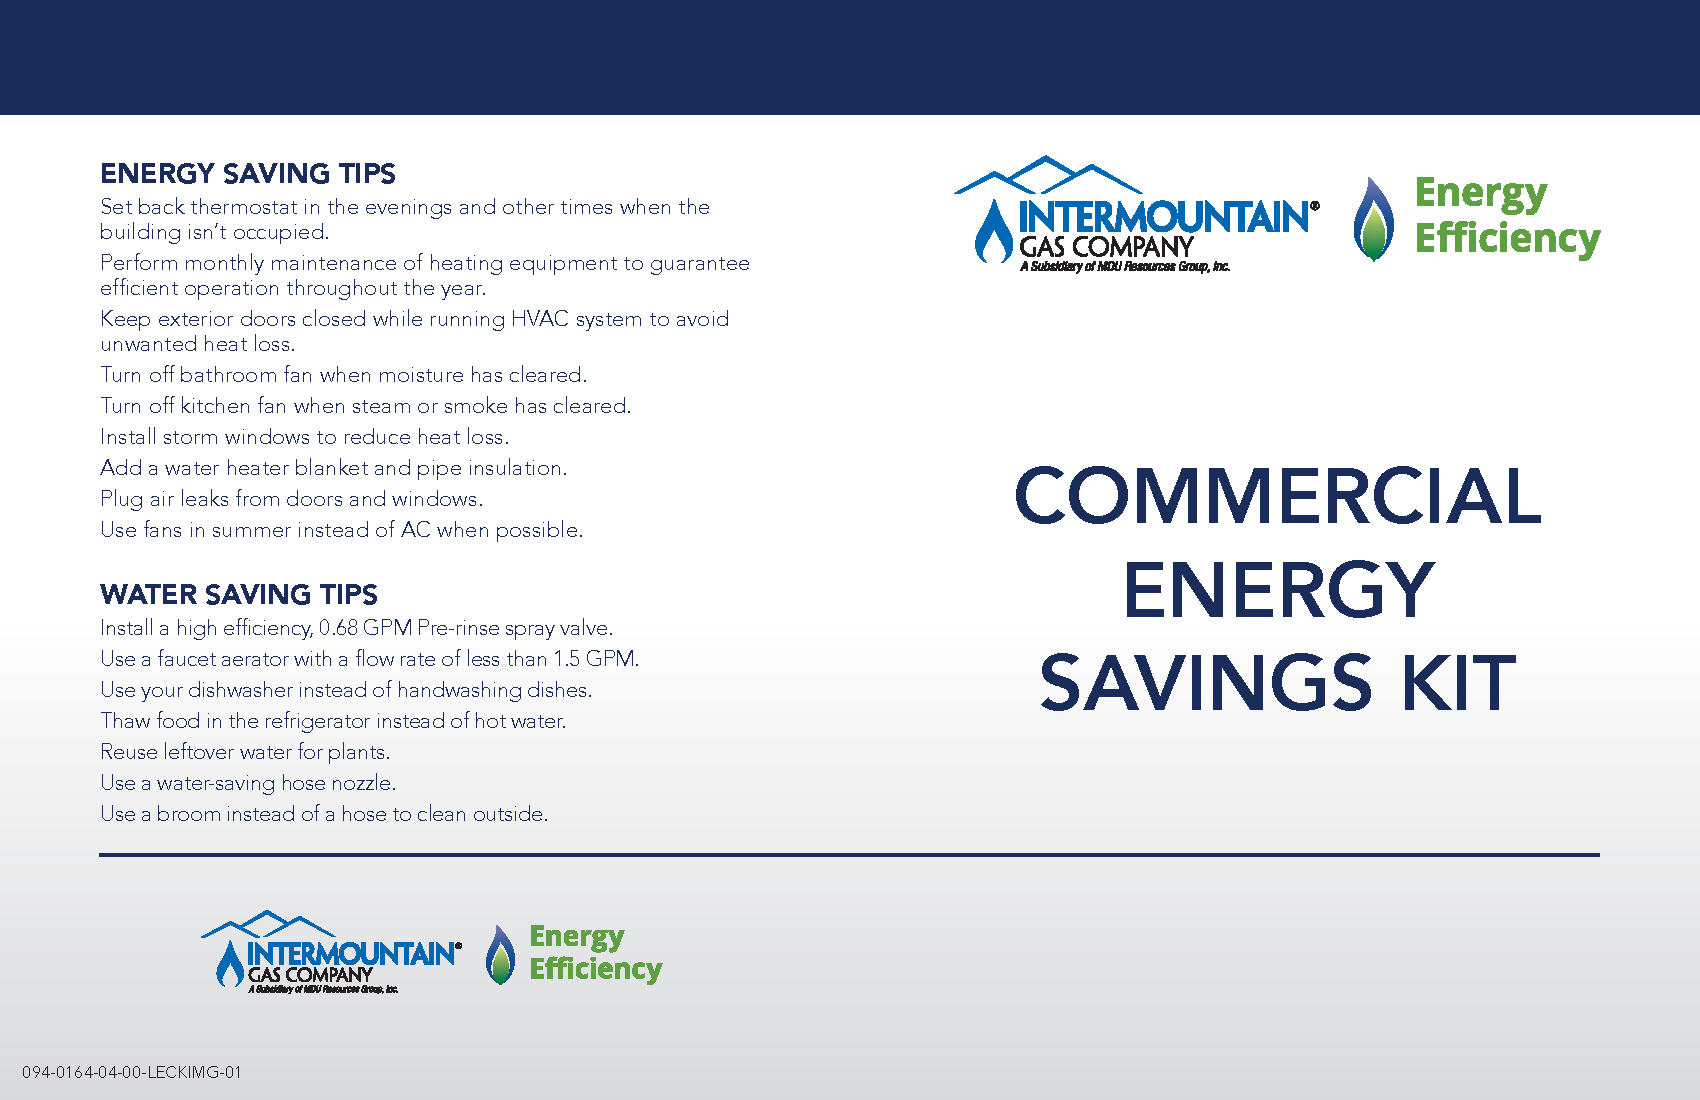 intermountain gas commercial energy savings kit